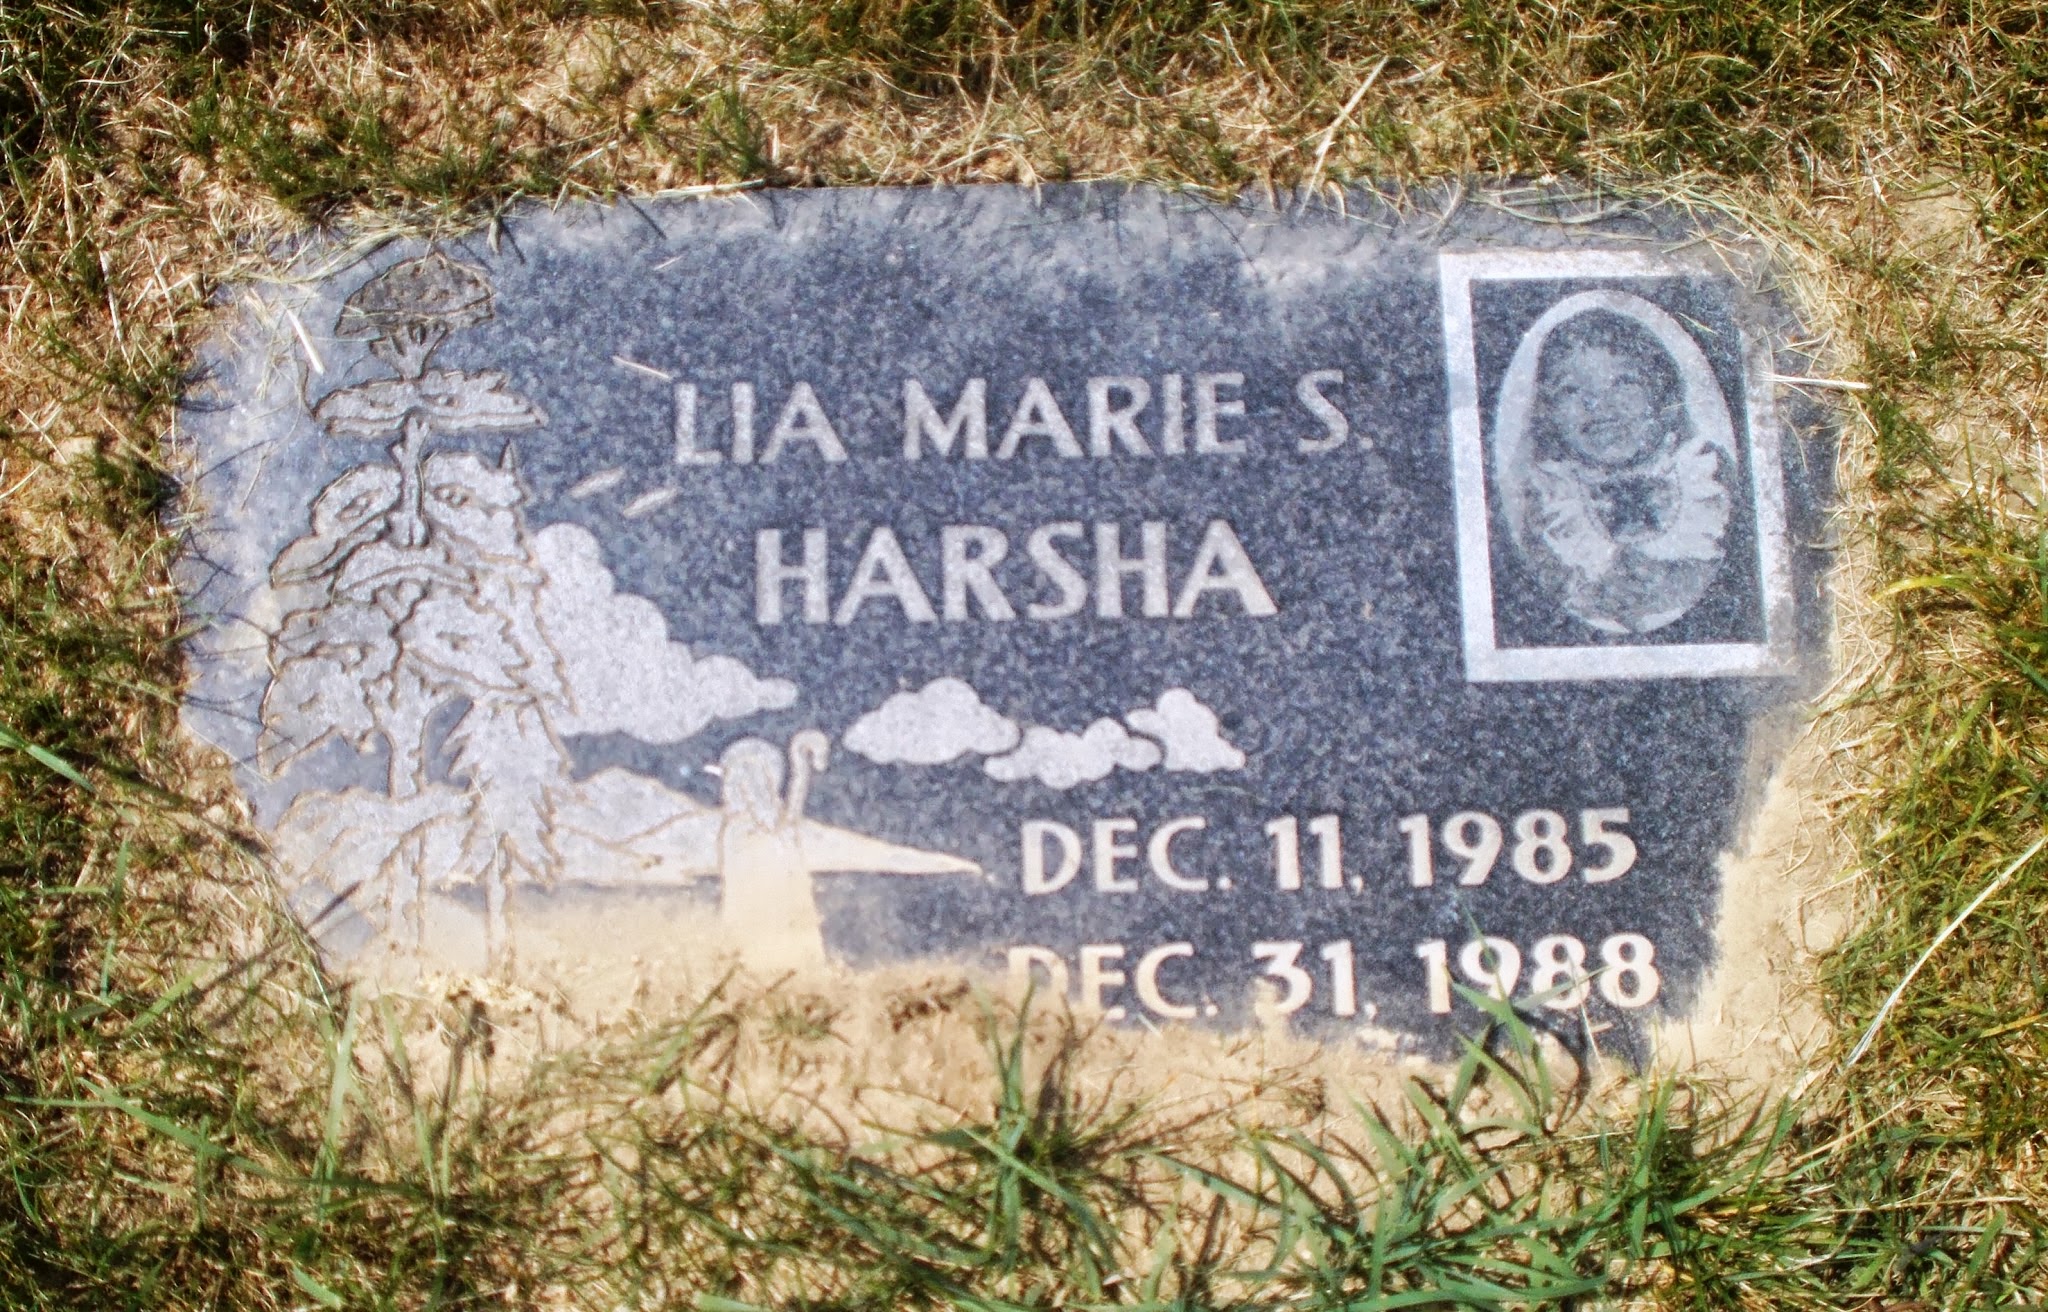 Lia Marie S Harsha